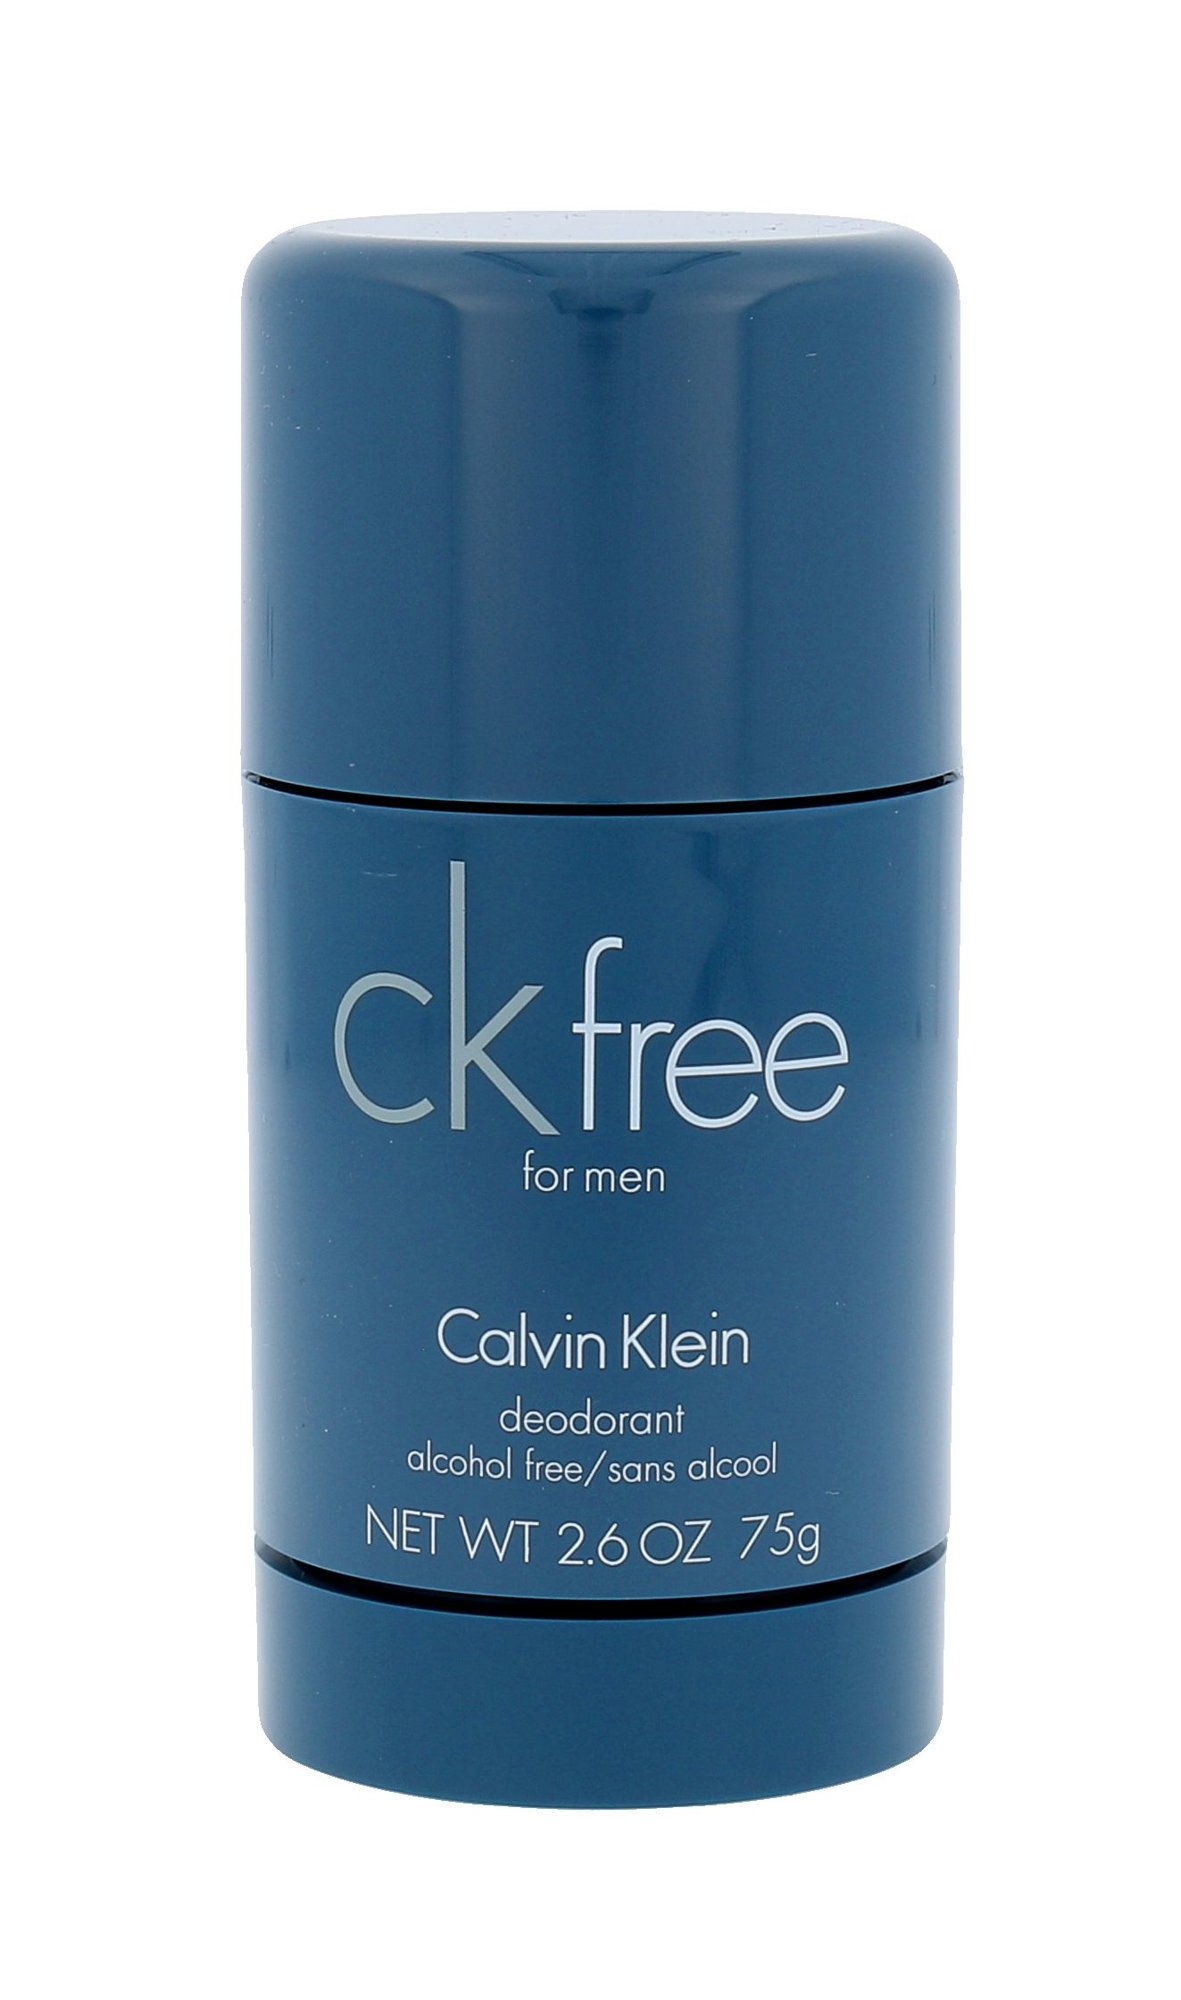 Calvin Klein CK Free dezodorantas